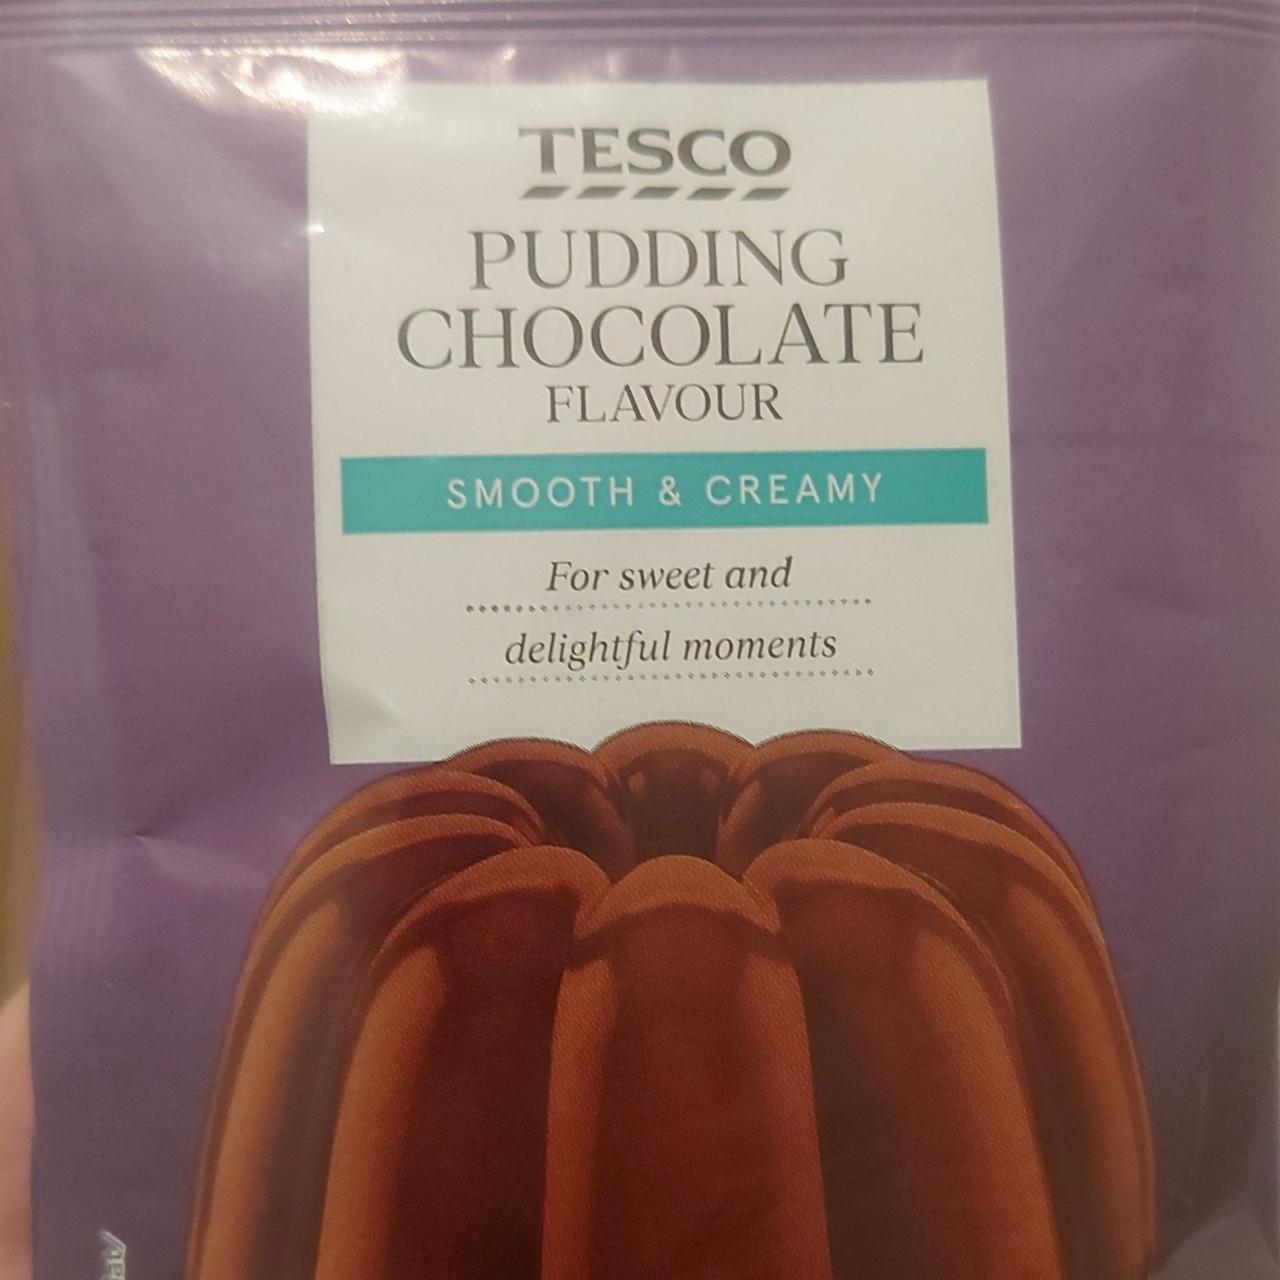 Képek - Pudding chocolate flavour Tesco